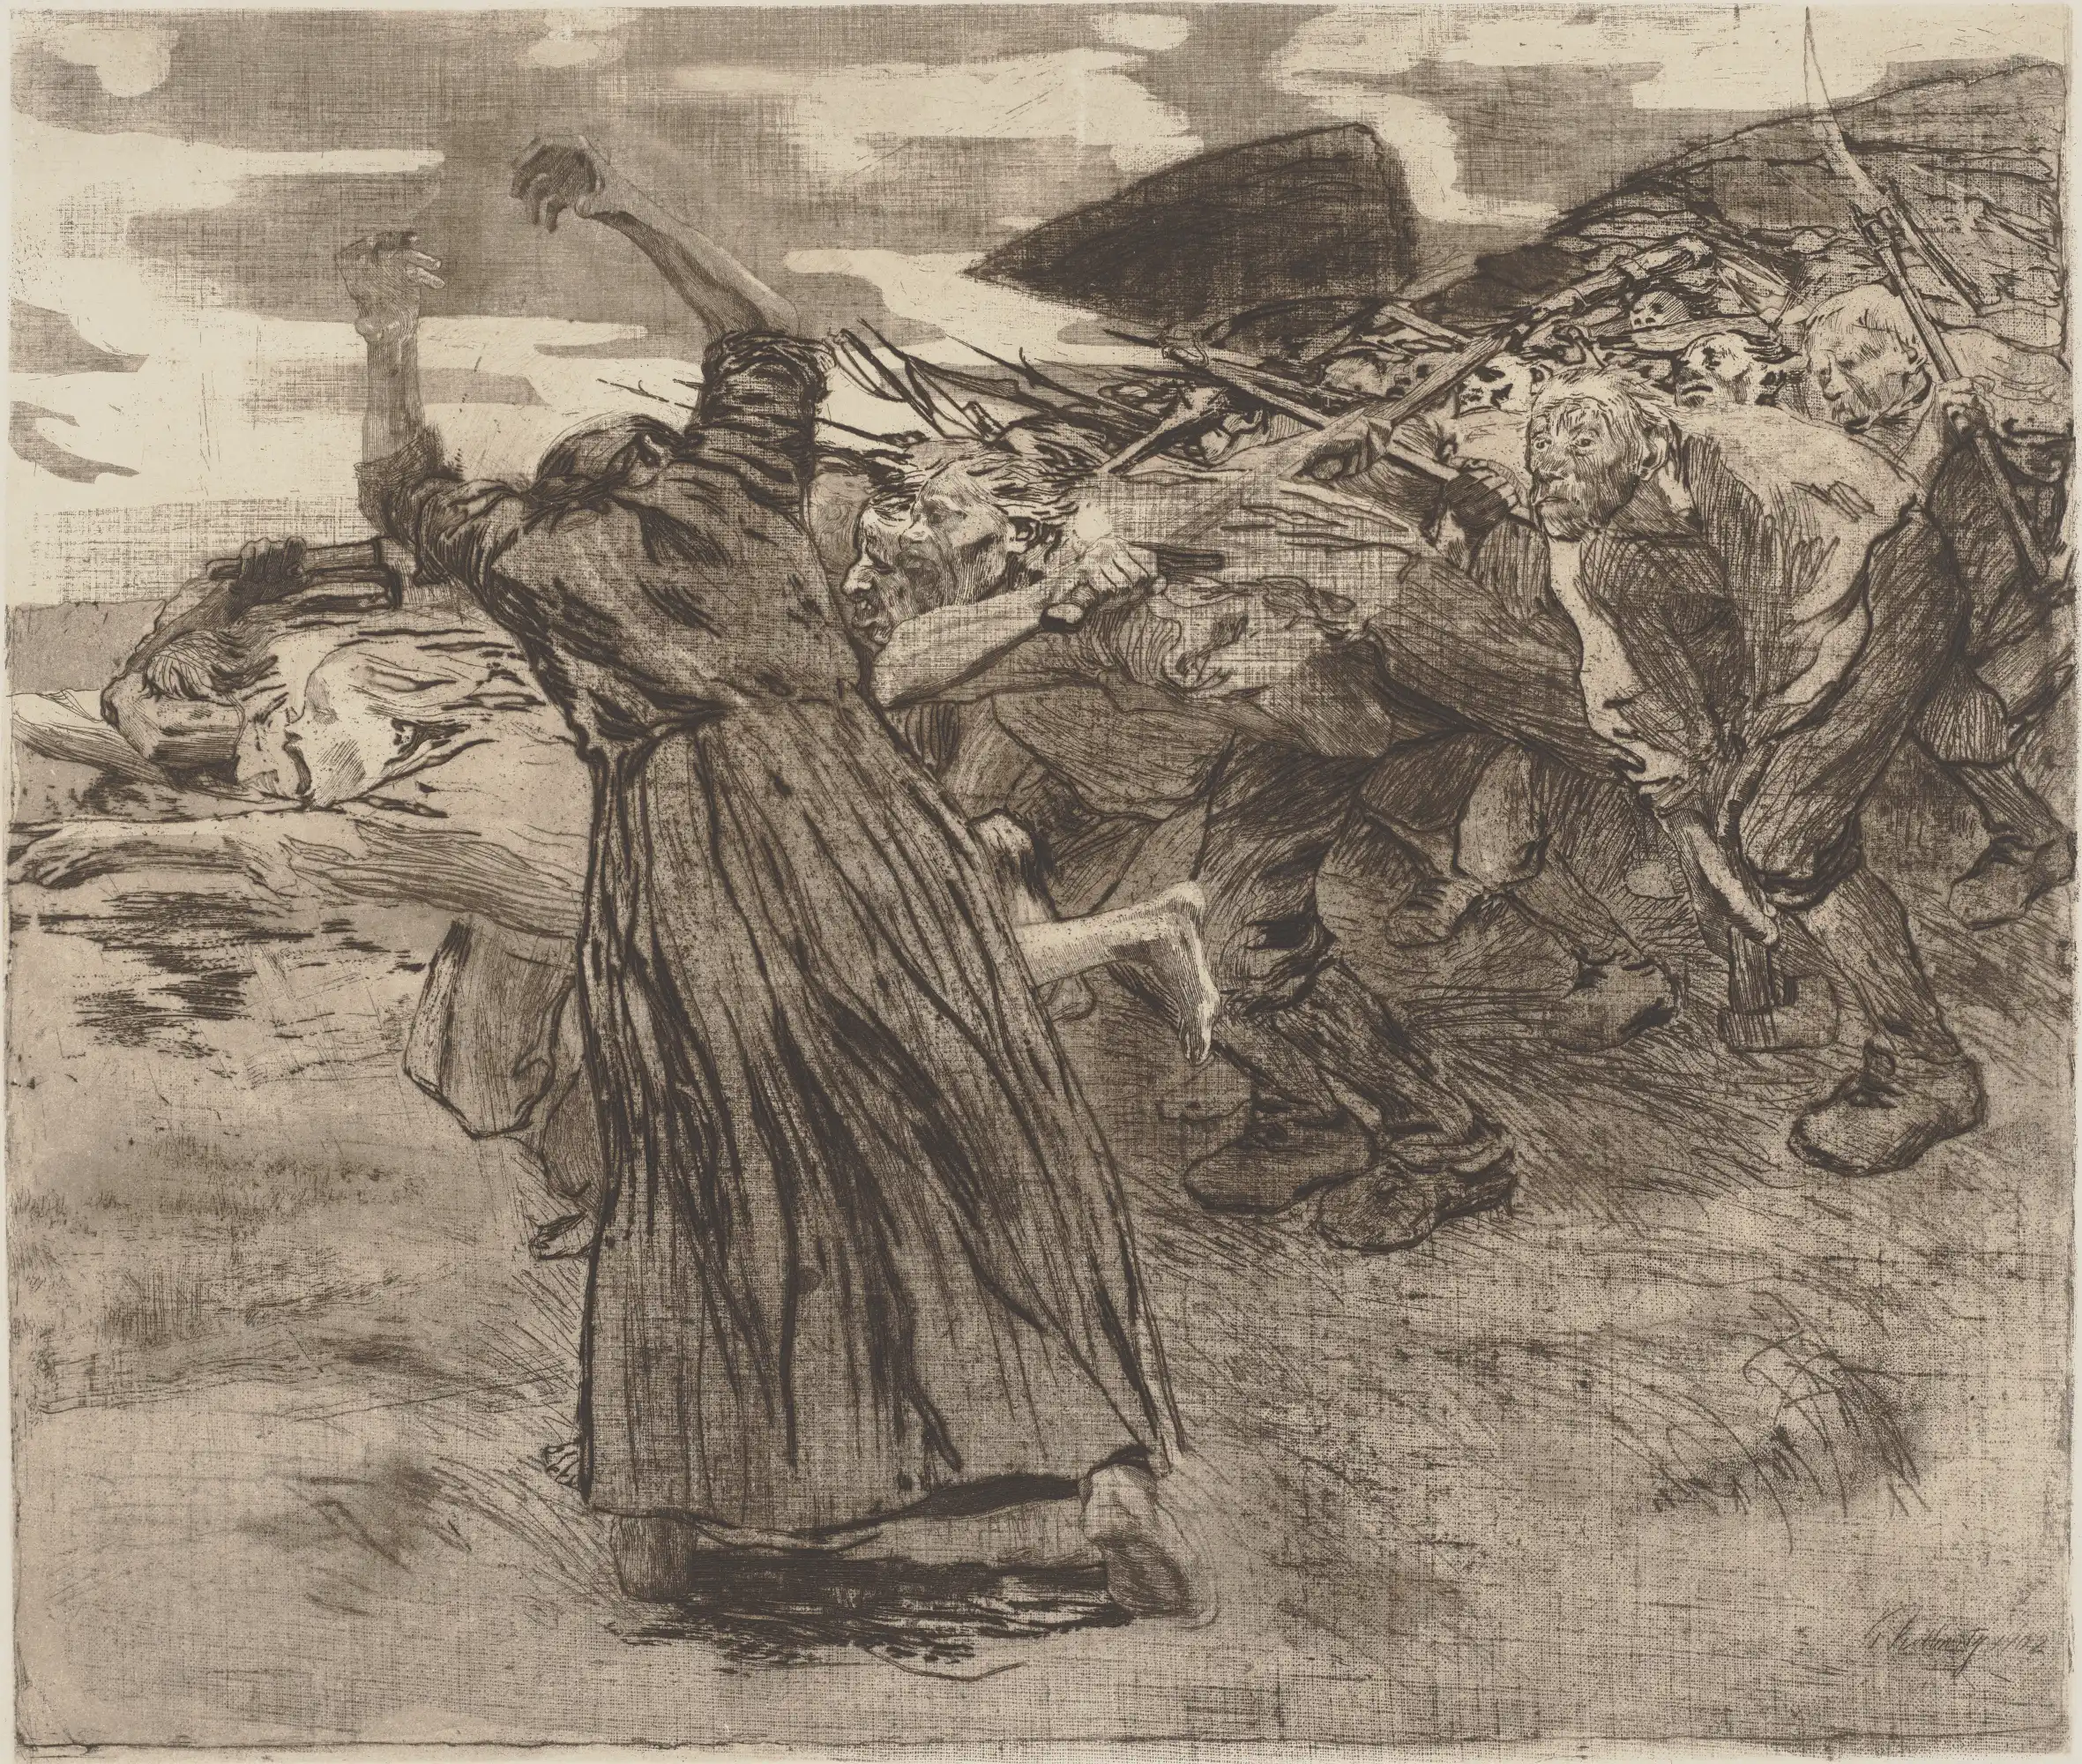 Käthe Kollwitz, Charge, sheet 5 from the series Peasants’ War, 1902/03